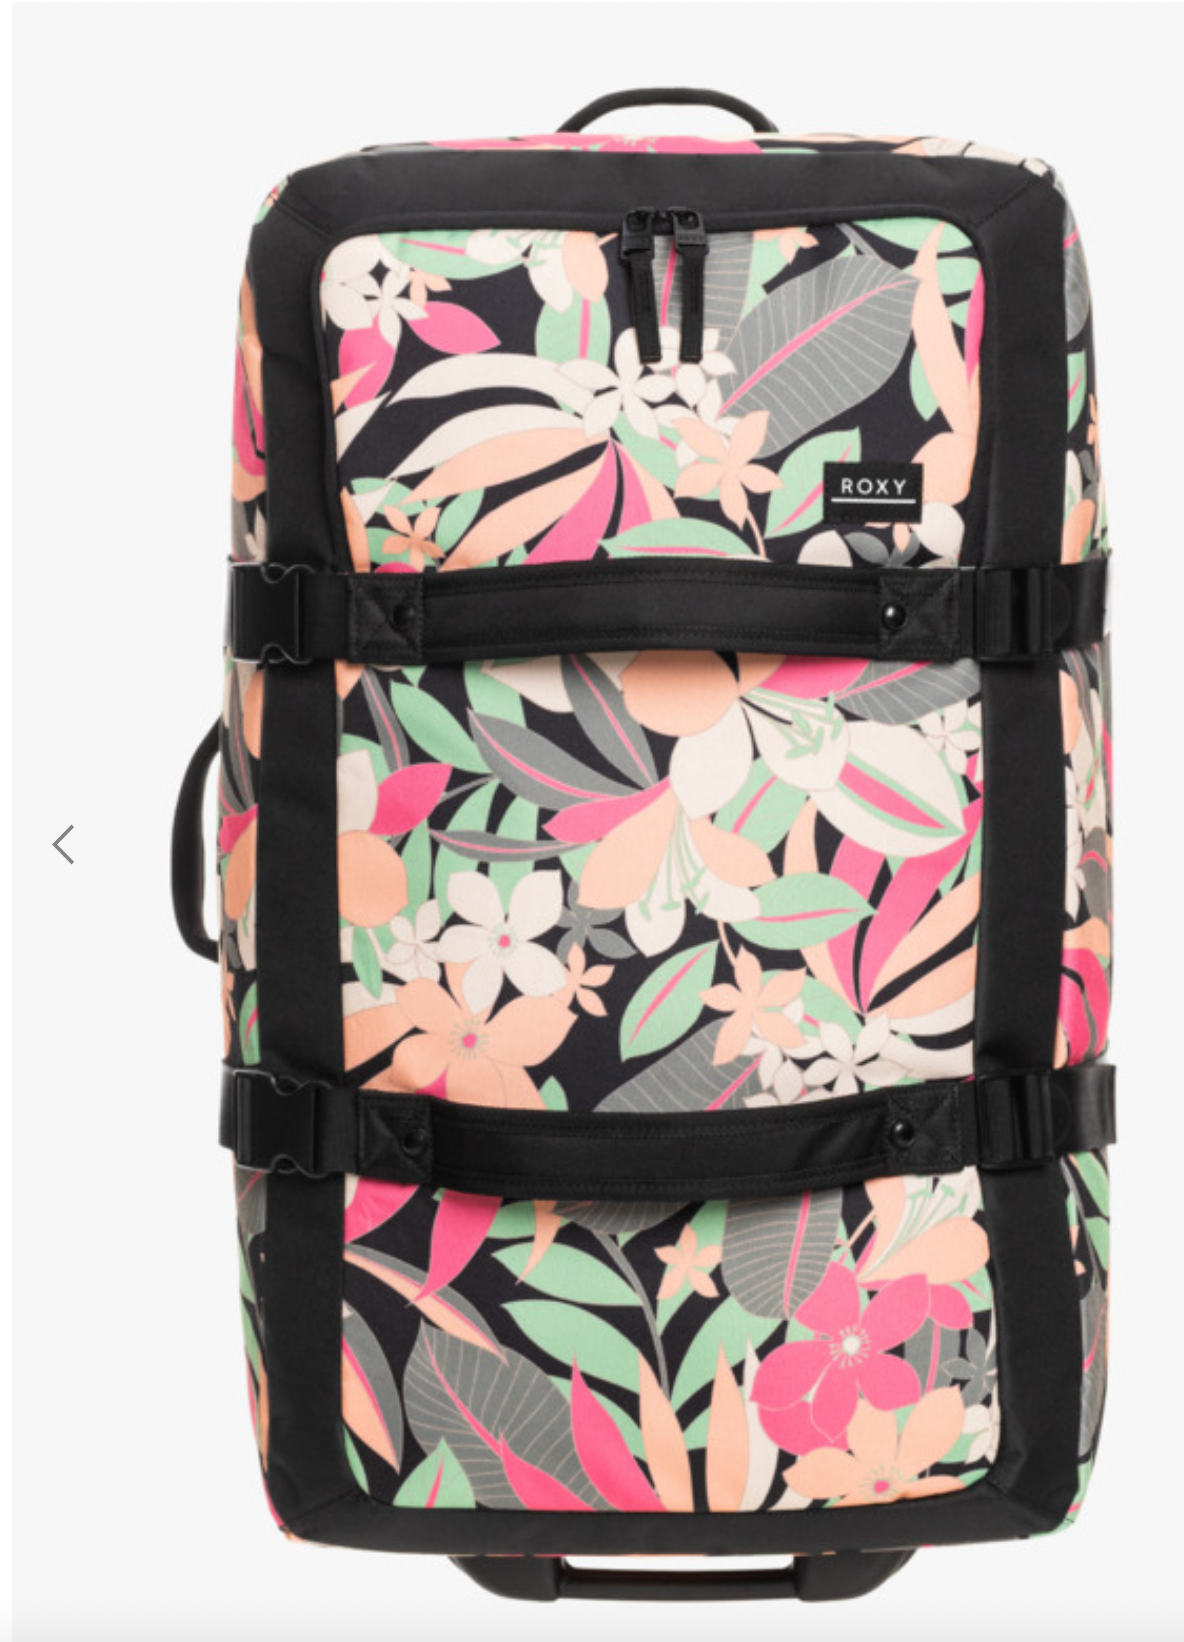 ROXY Travel Dreaming - Medium Wheelie Suitcase for Women